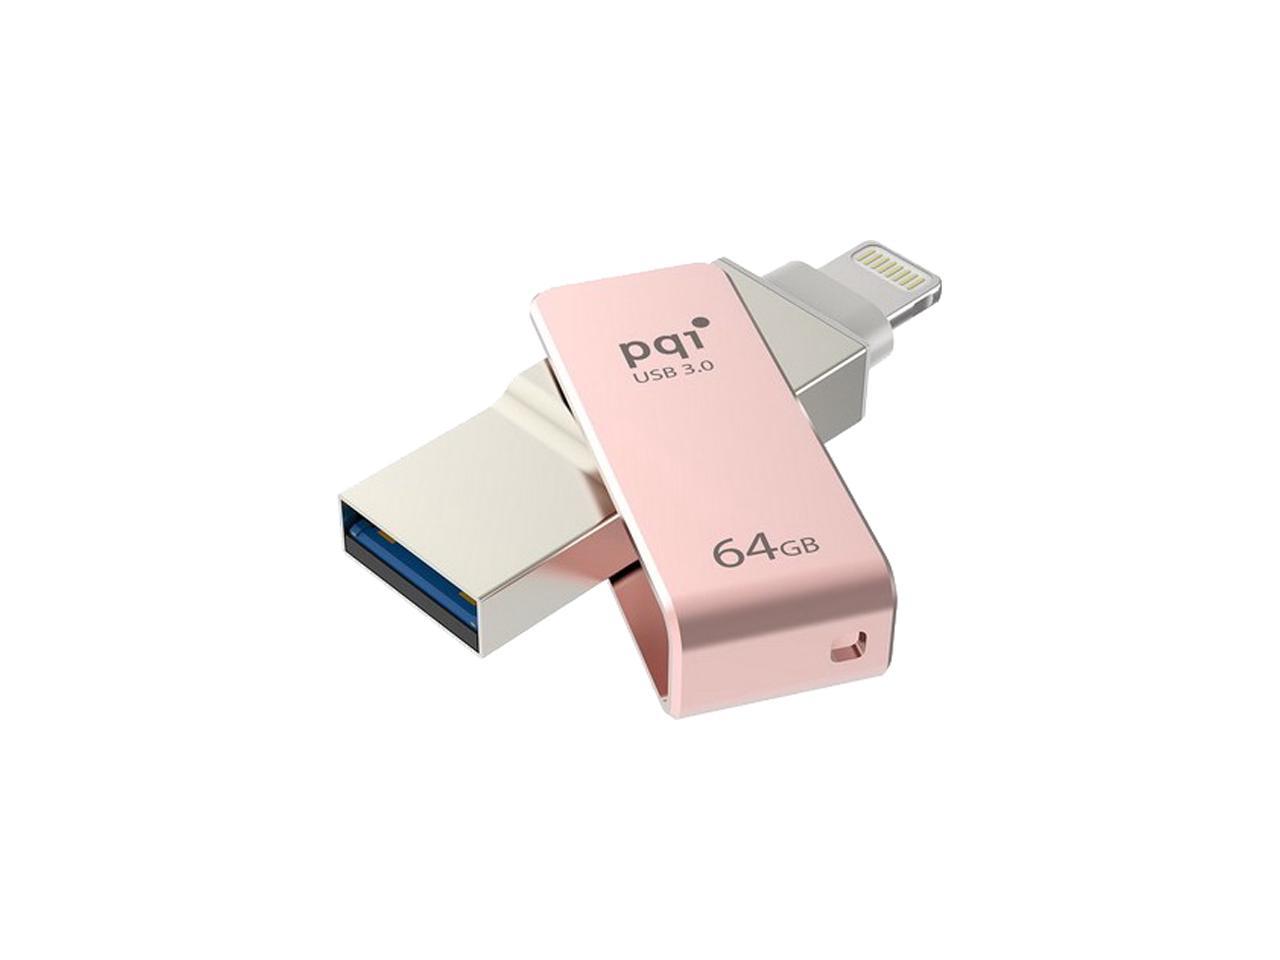 PQI iConnect Mini [Apple MFi] 64GB Mobile Flash Drive w/ Lightning Connector for iPhones / iPads / iPod / Mac & PC USB 3.0 (Rose Gold) Model 6I04-064GR3001